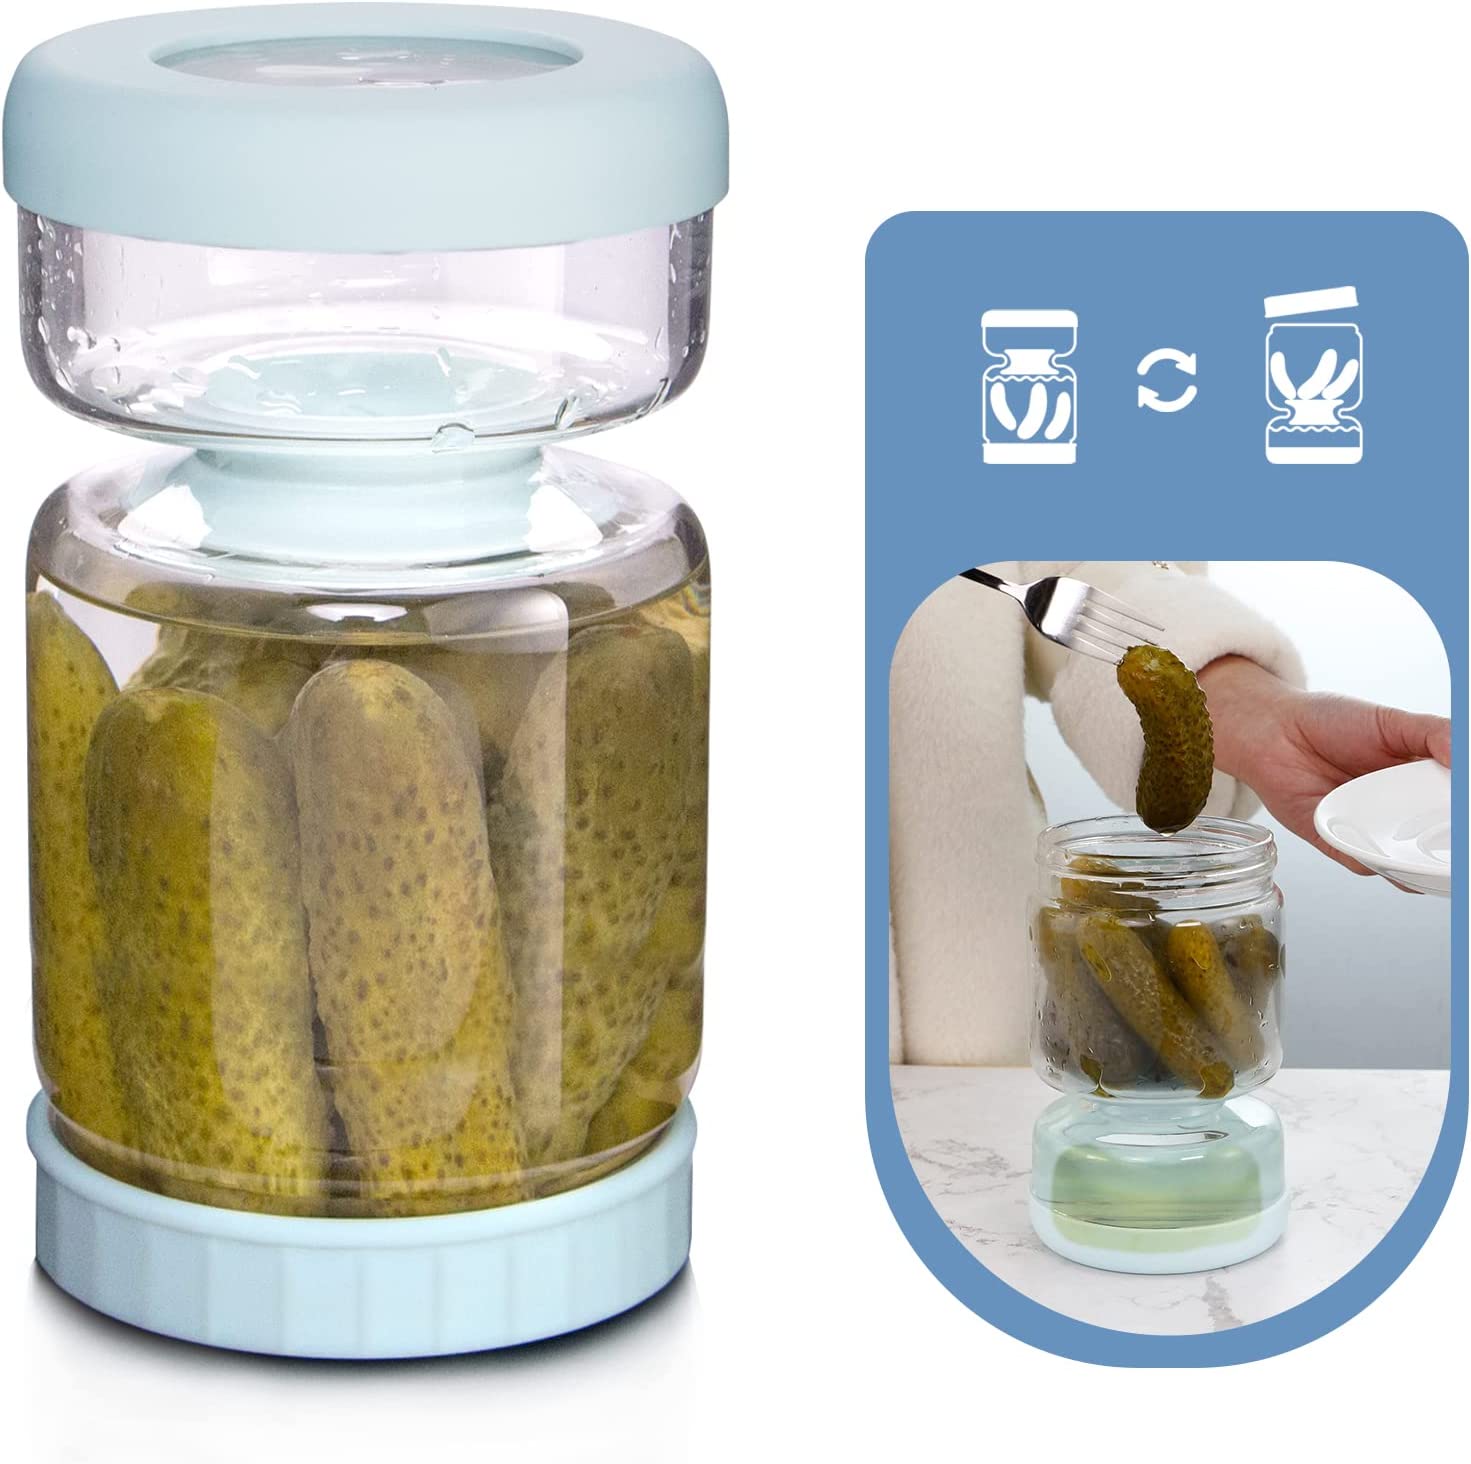 pickle jar that strains itself